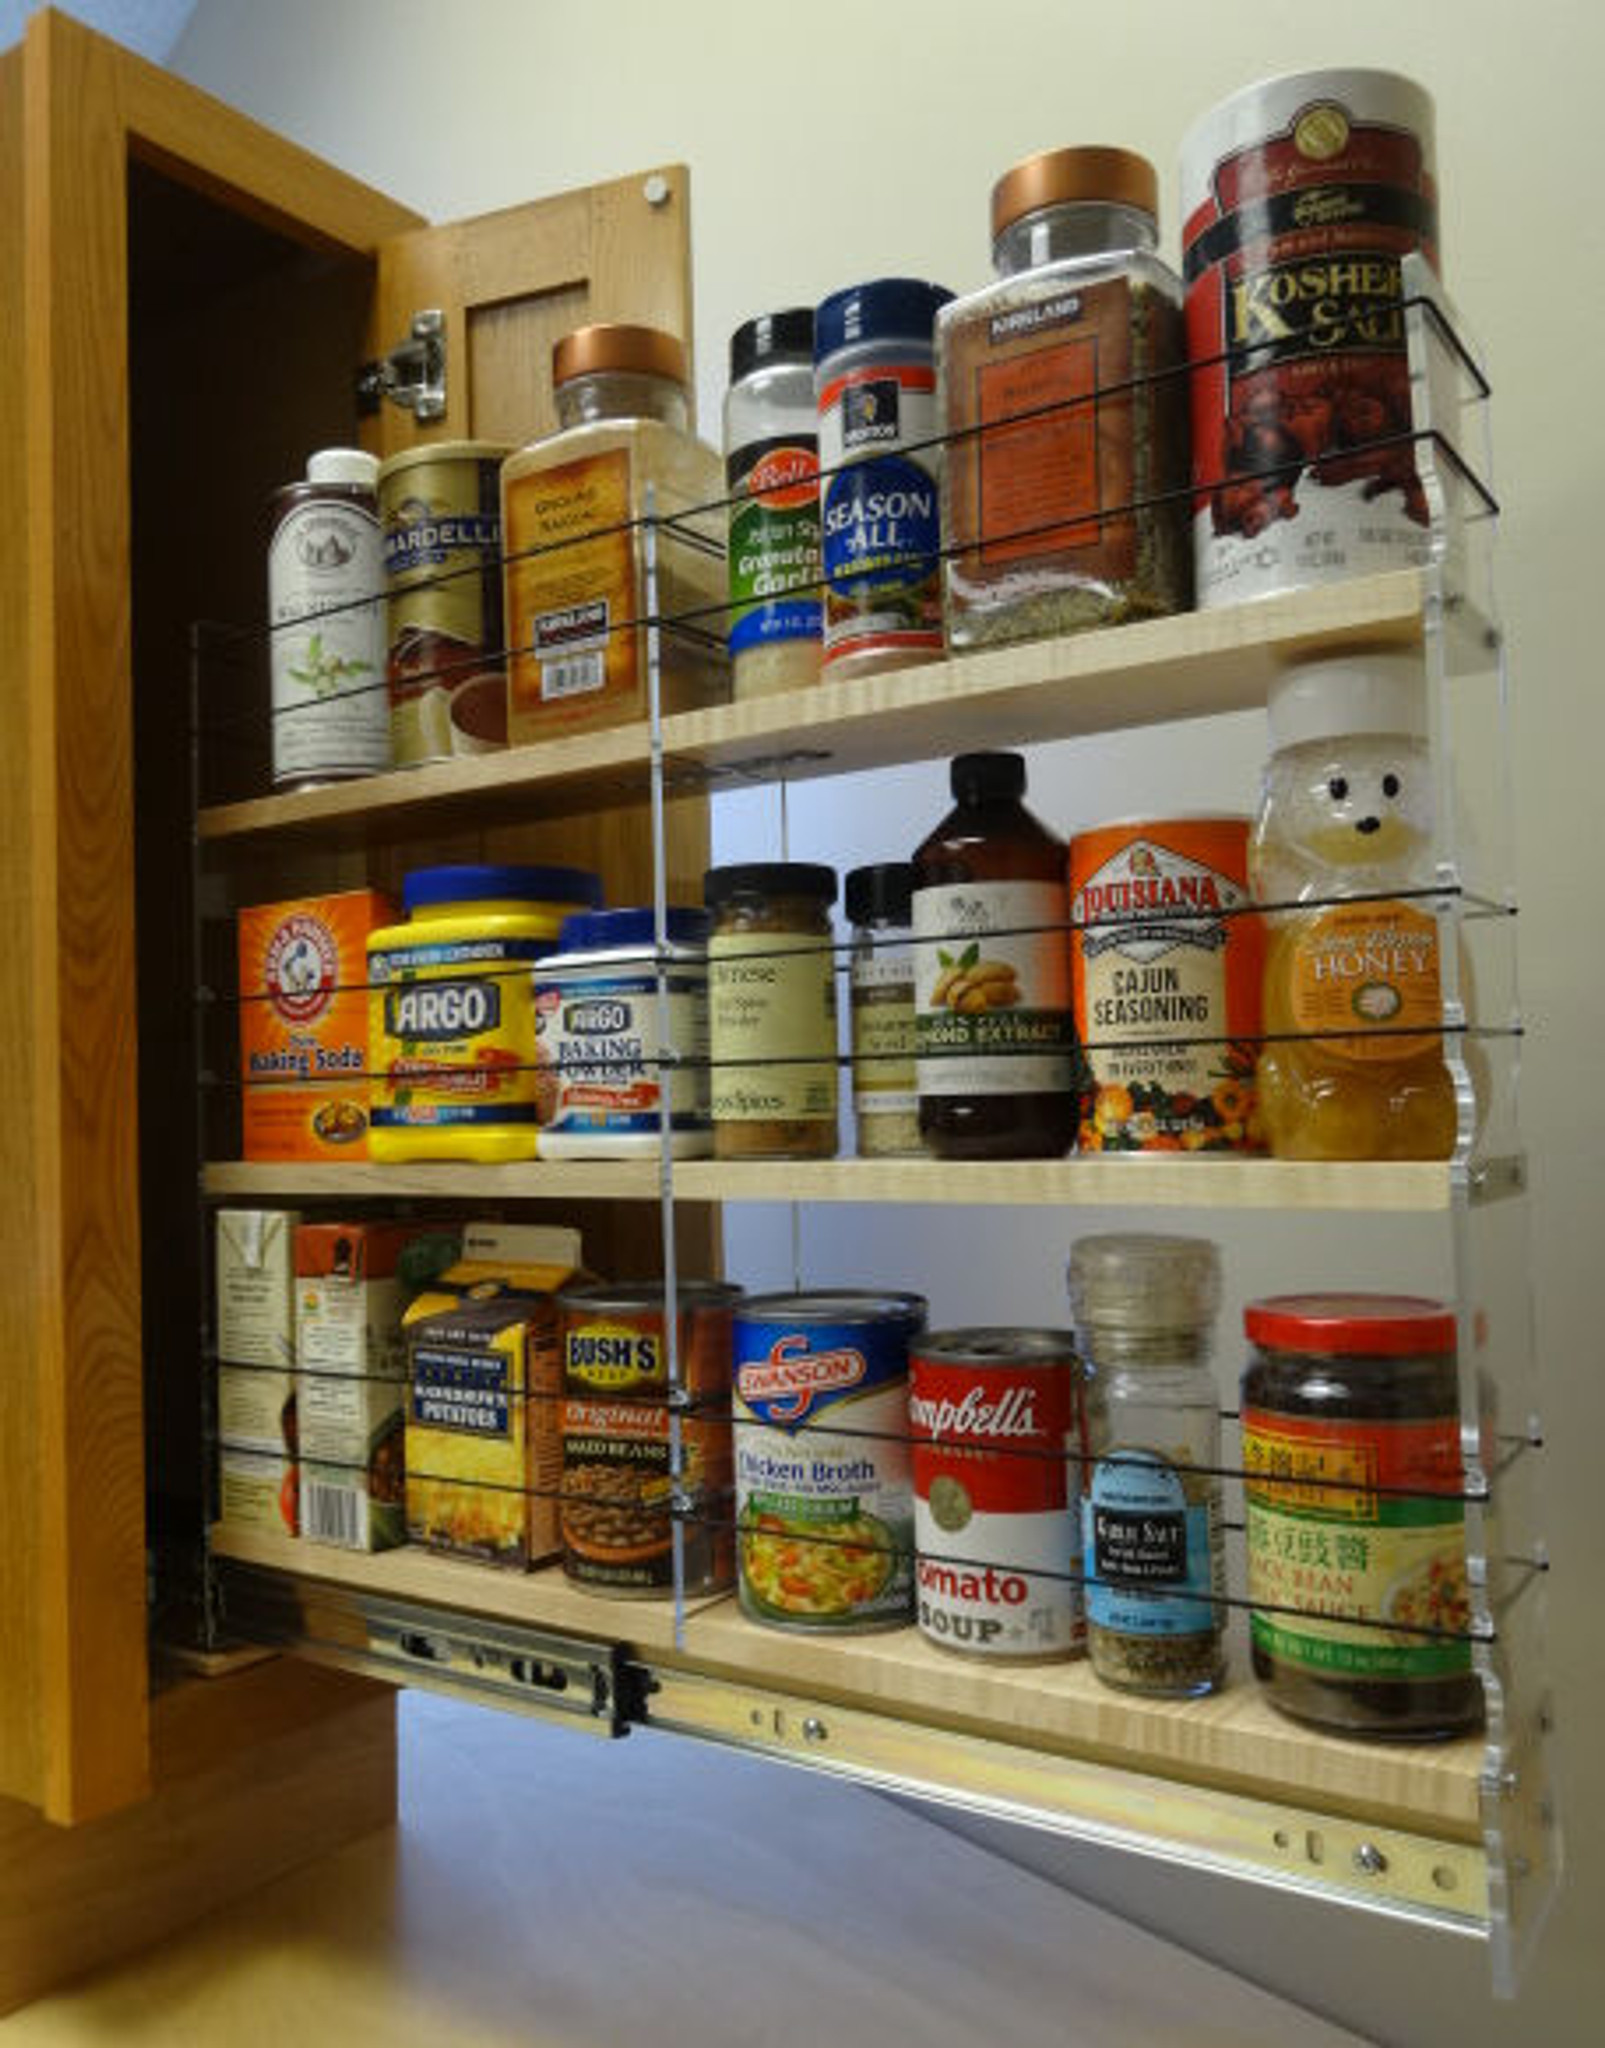 Spice Rack Organizer Cabinet, Spice Rack Countertop, Wood Spice Shelf, Spice  Jar Rack, Kitchen Spice Cabinet, Spice Storage, Spice Stand 